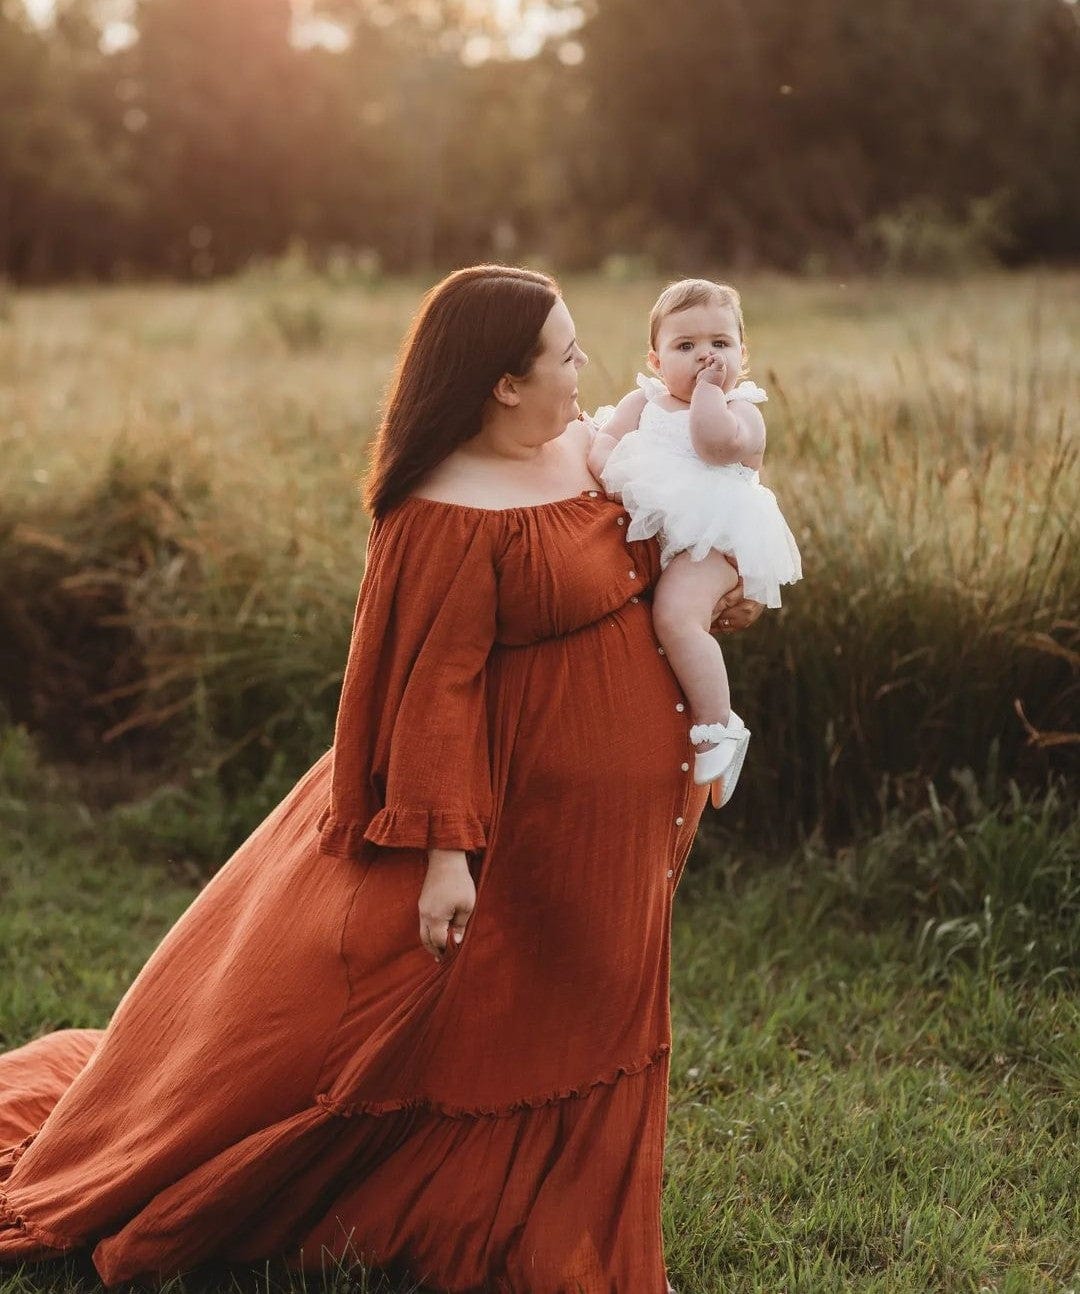 Plus Size Maternity Dresses for Photoshoots